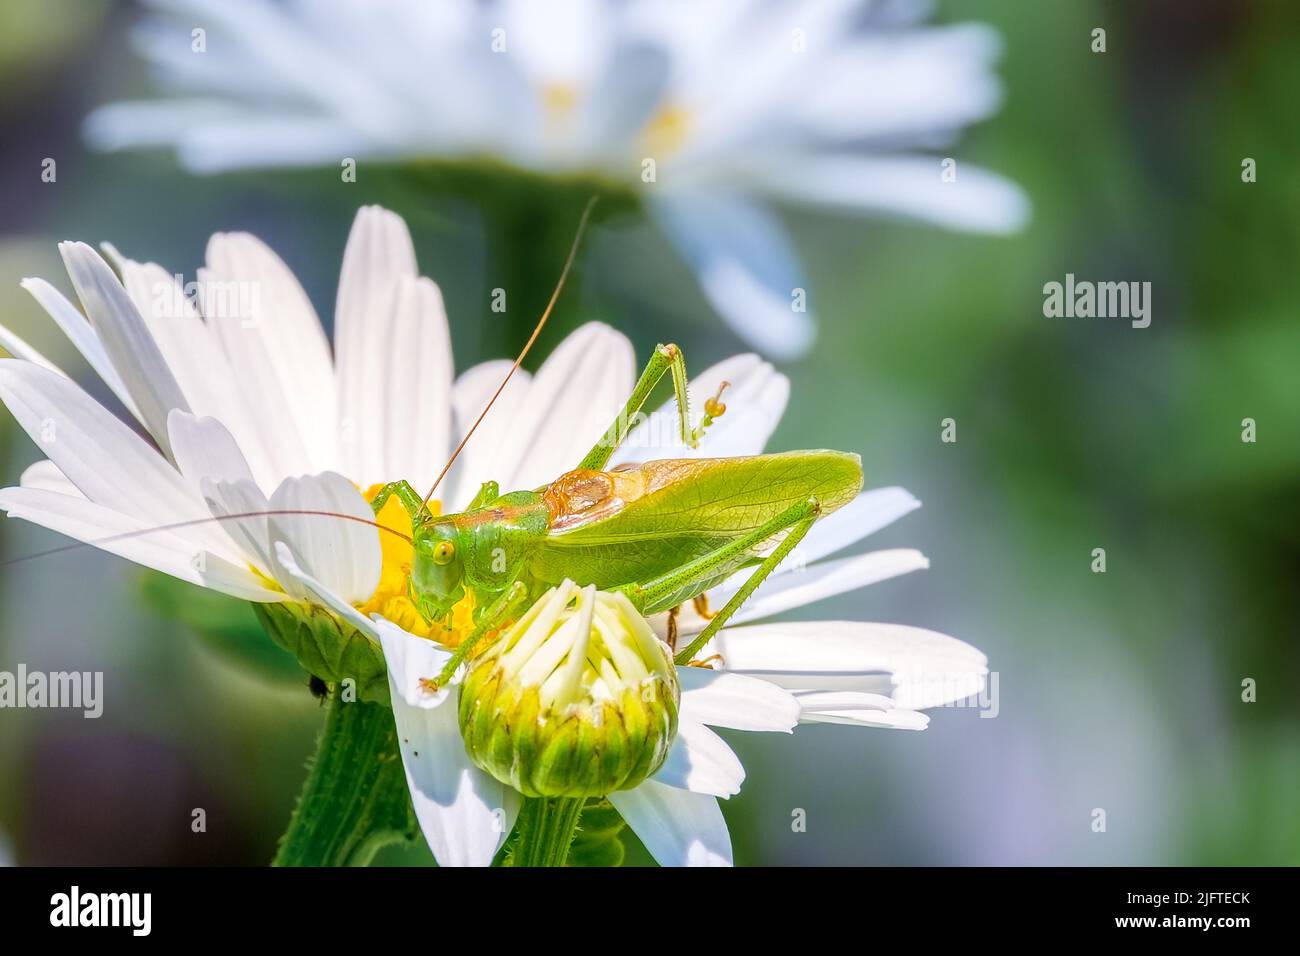 Locust on a flower. Pest Stock Photo